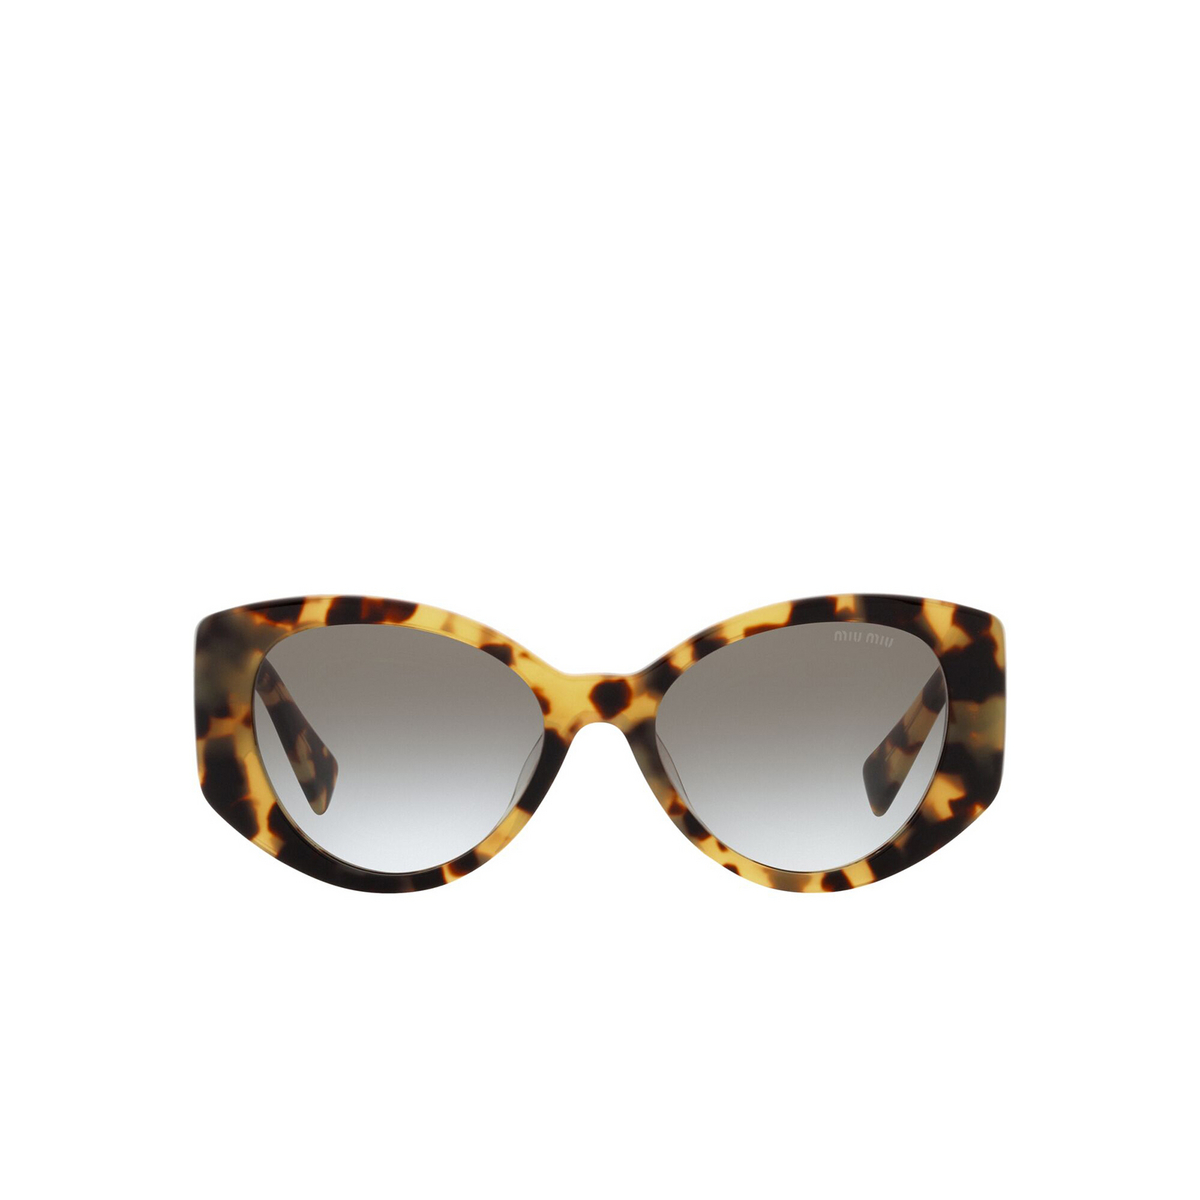 Miu Miu® Cat-eye Sunglasses: MU 03WS color Light Havana 7S00A7 - front view.